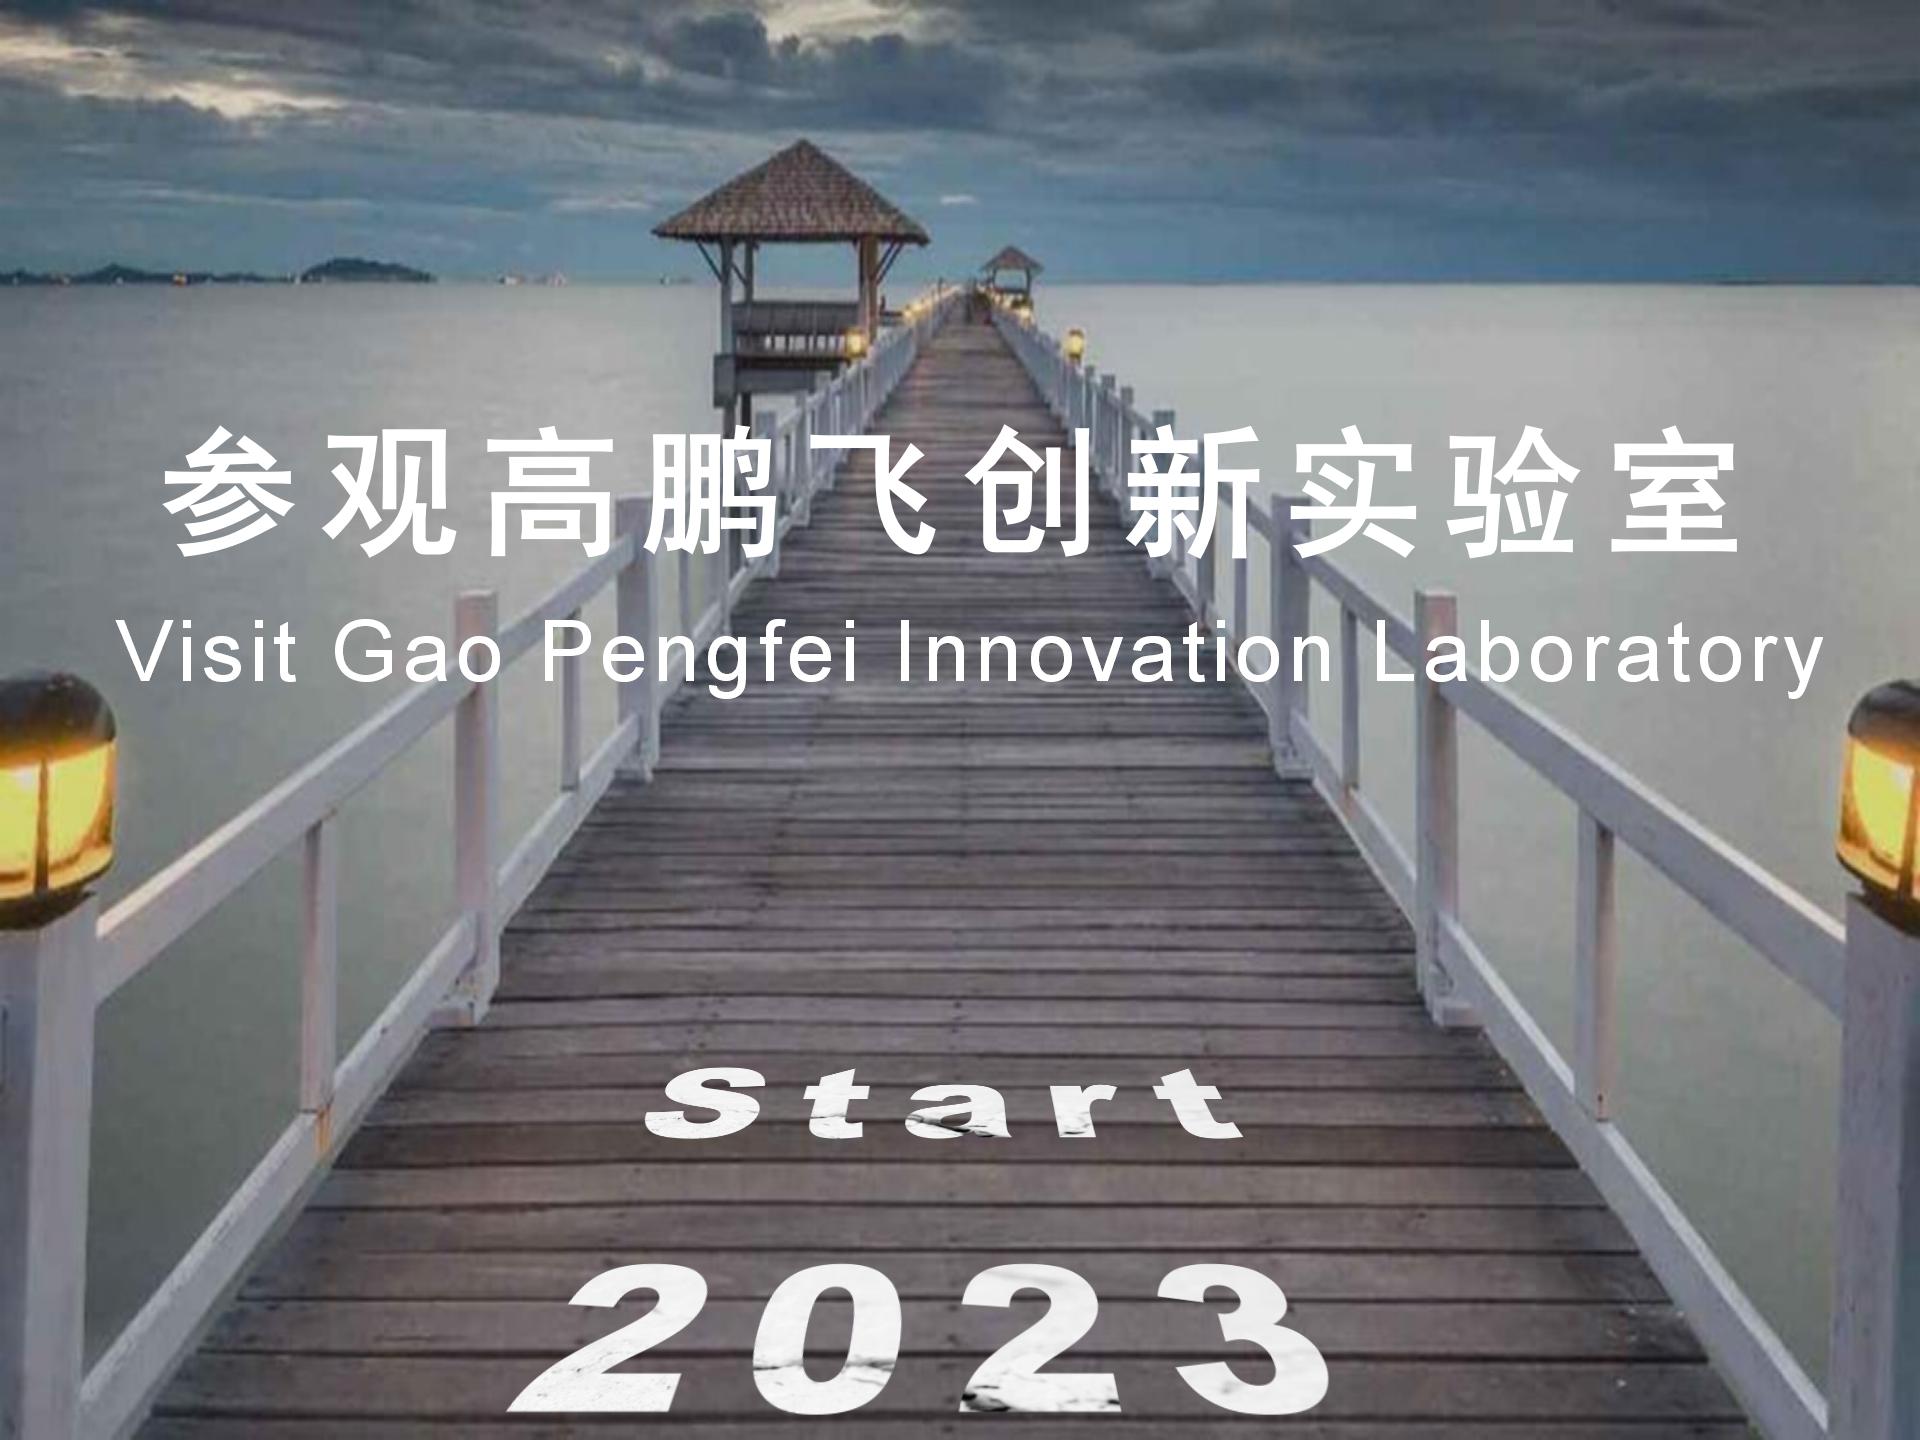 Visit Gao Pengfei Innovation Laboratory